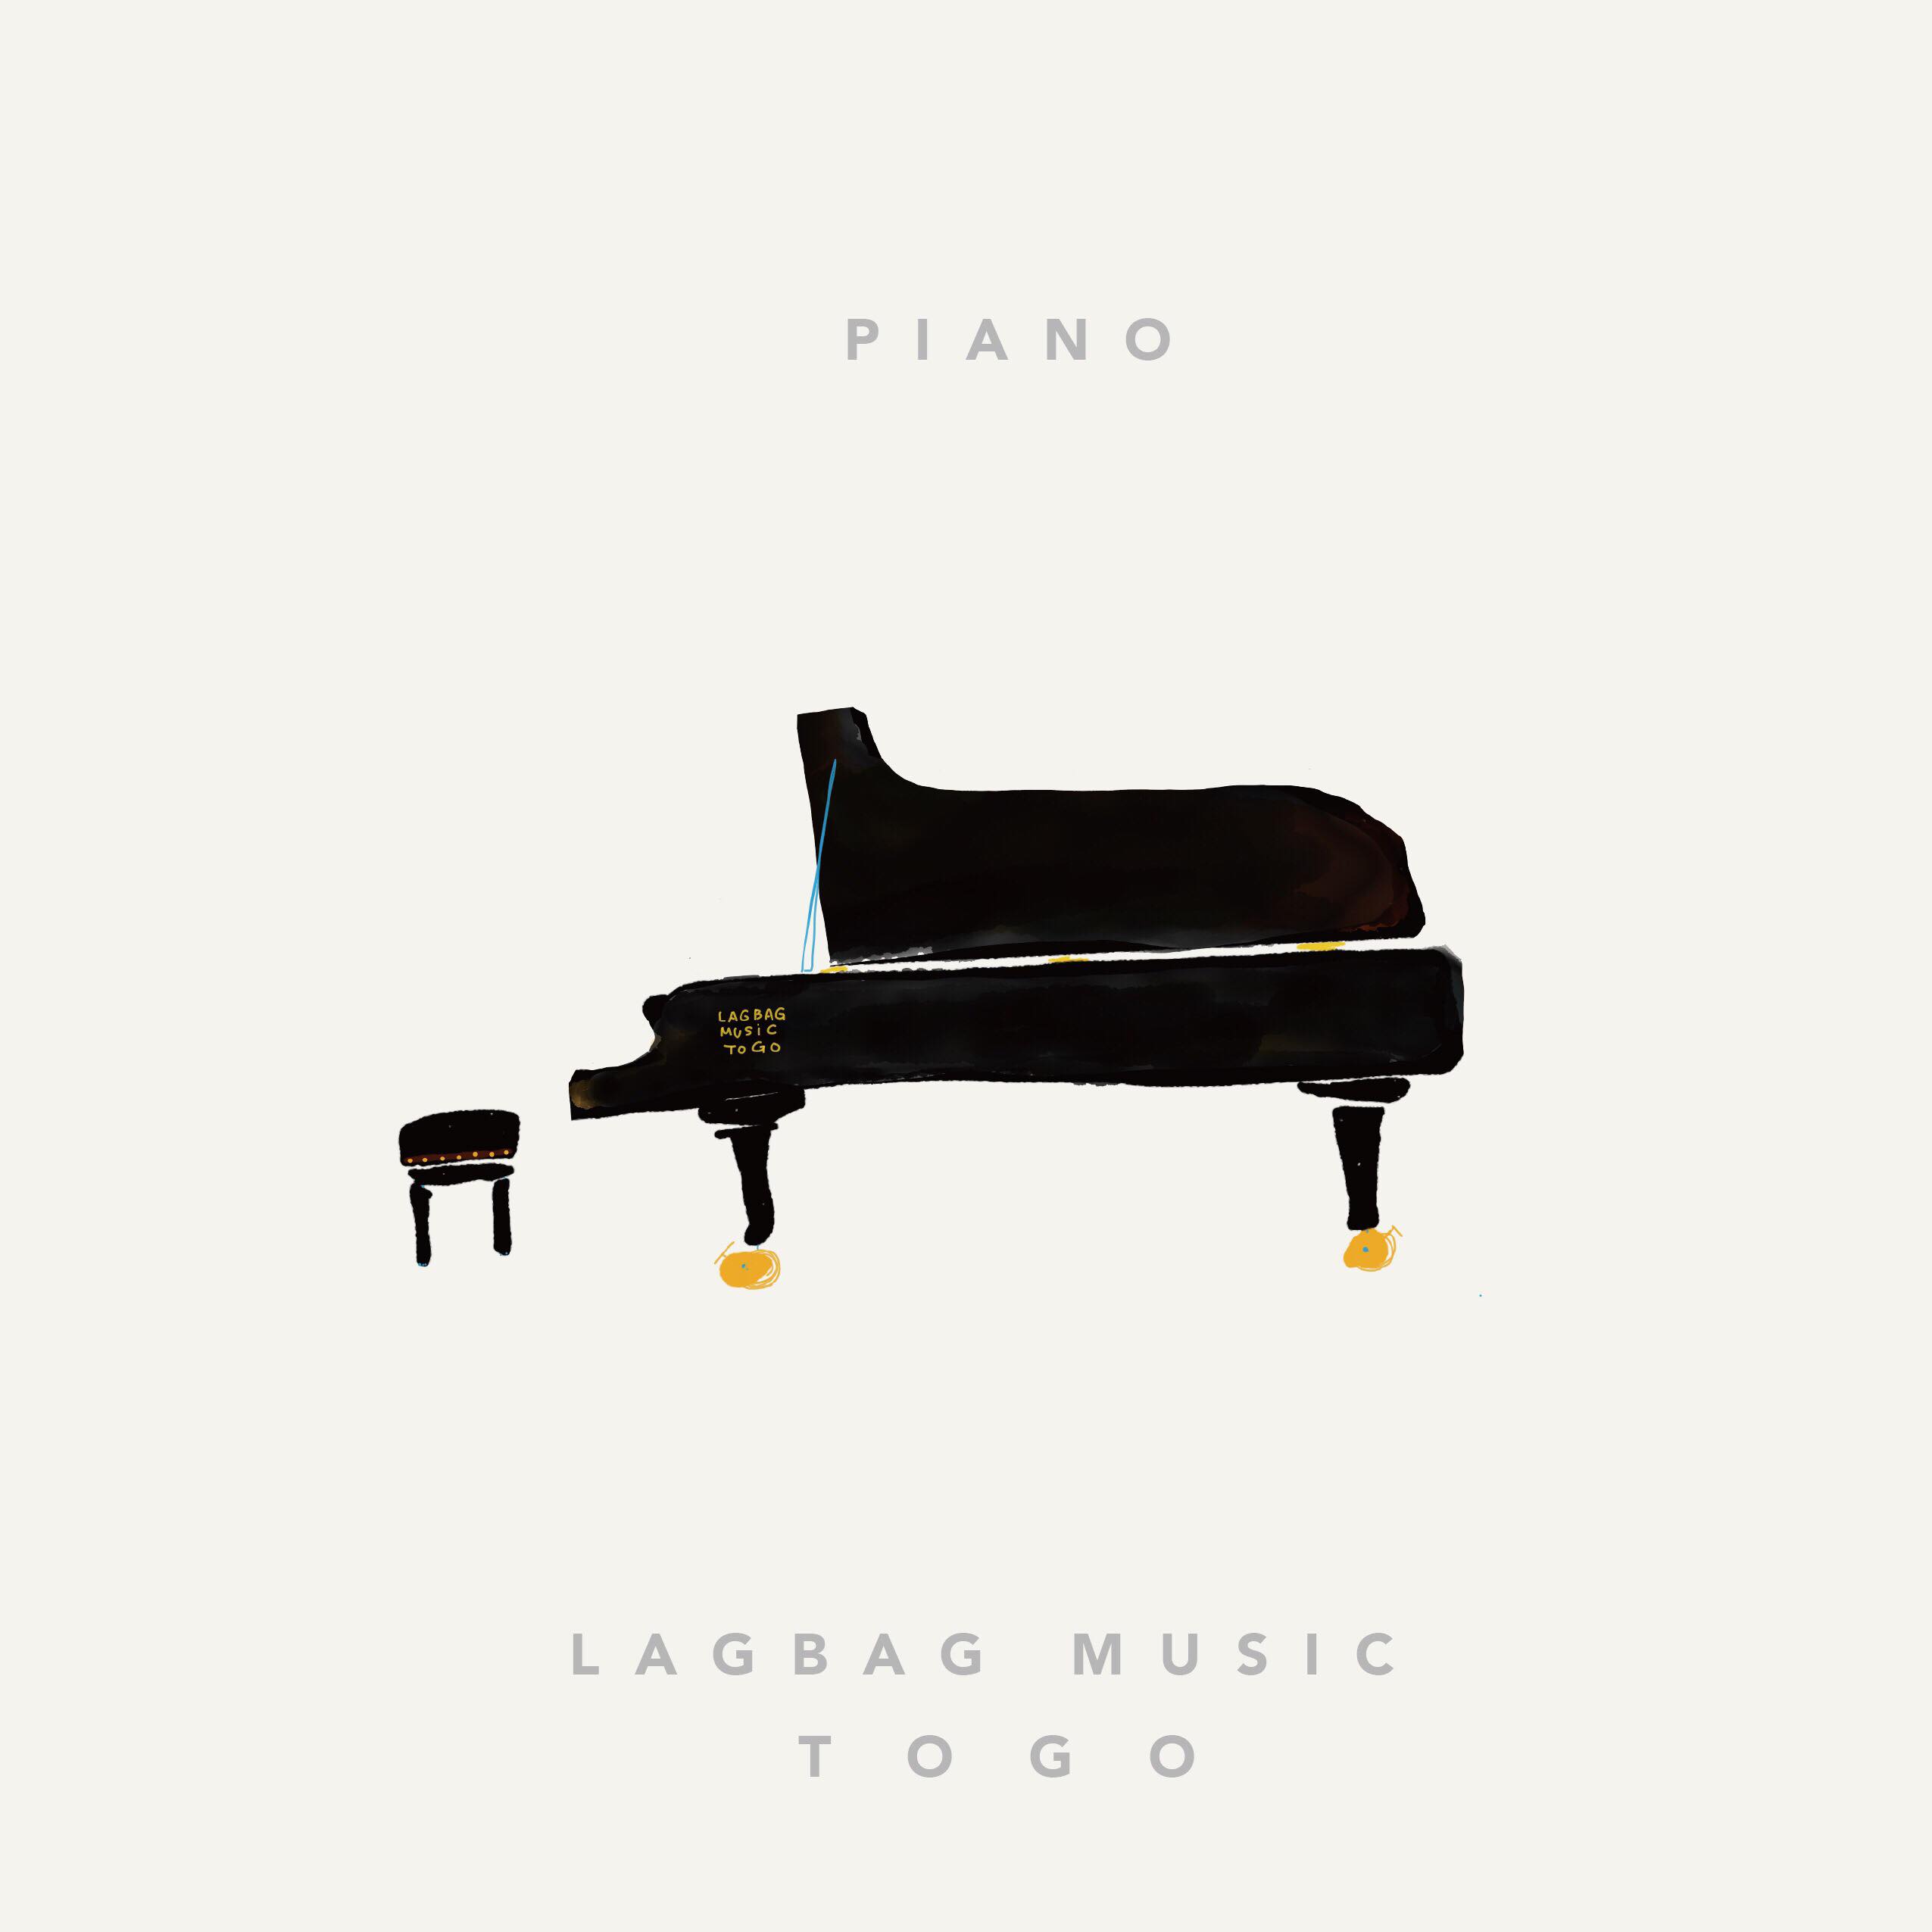 LAGBAG_MUSIC_TOGO_PIANO_LESSON.jpg